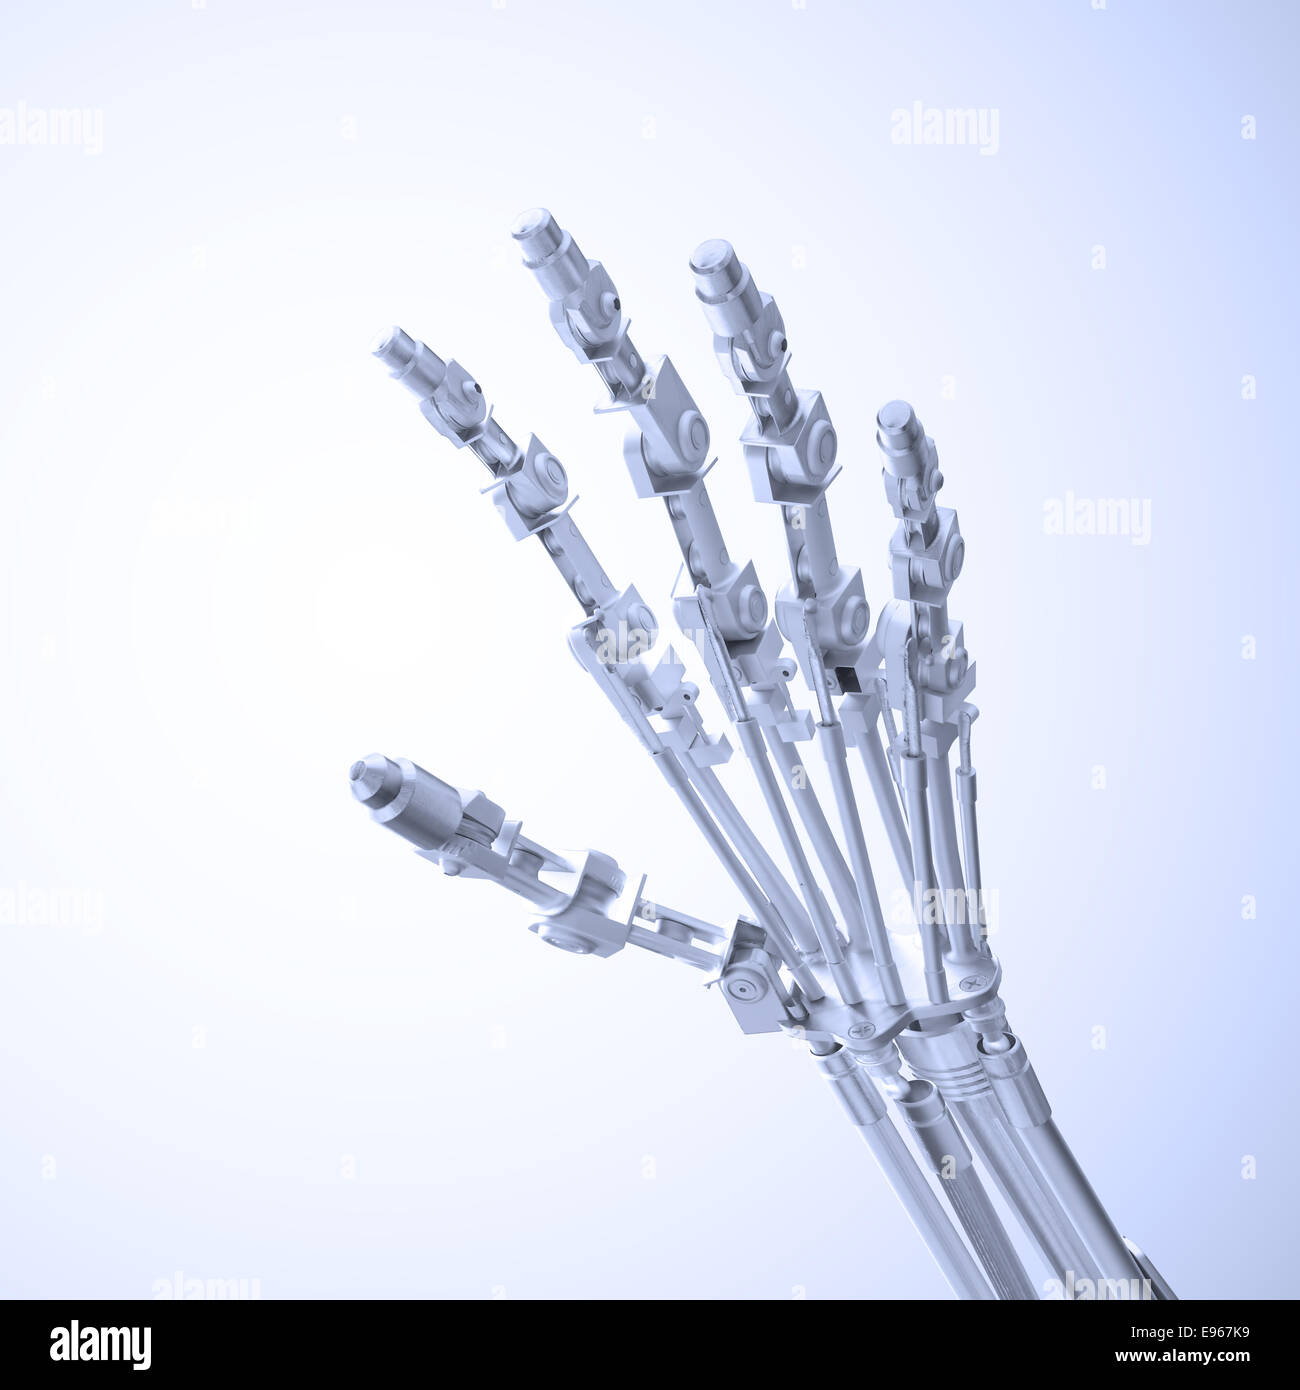 An artificial limb - prosthetics  and robotics technology concept Stock Photo